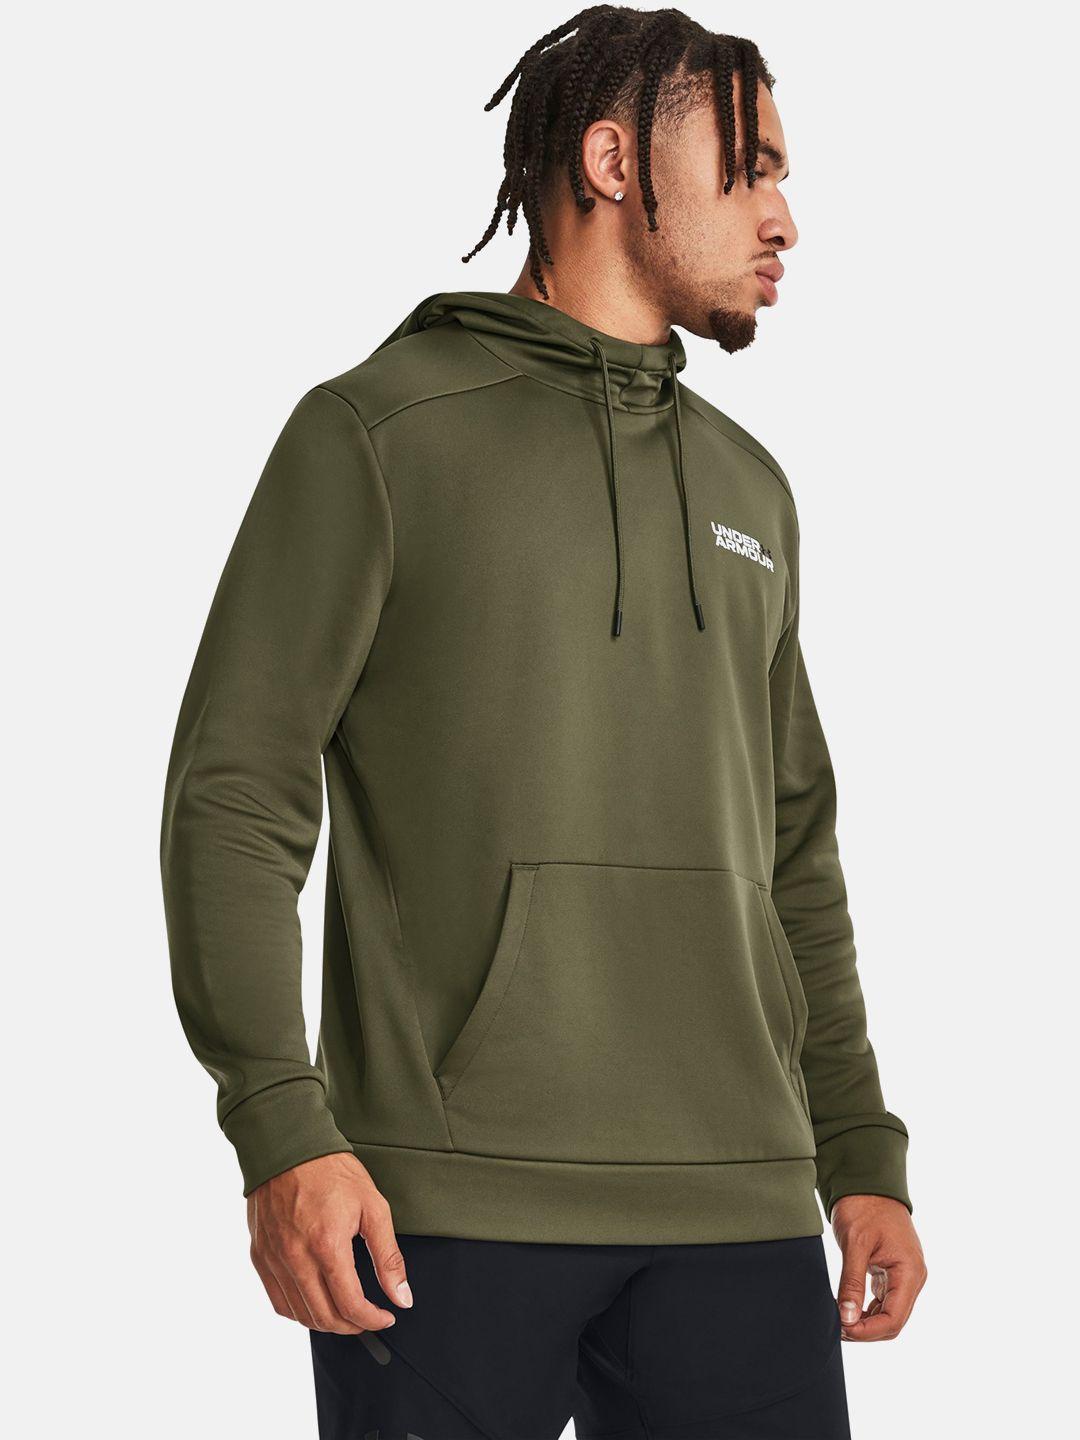 under-armour-fleece(r)-graphic-brand-logo-printed-hooded-sweatshirt